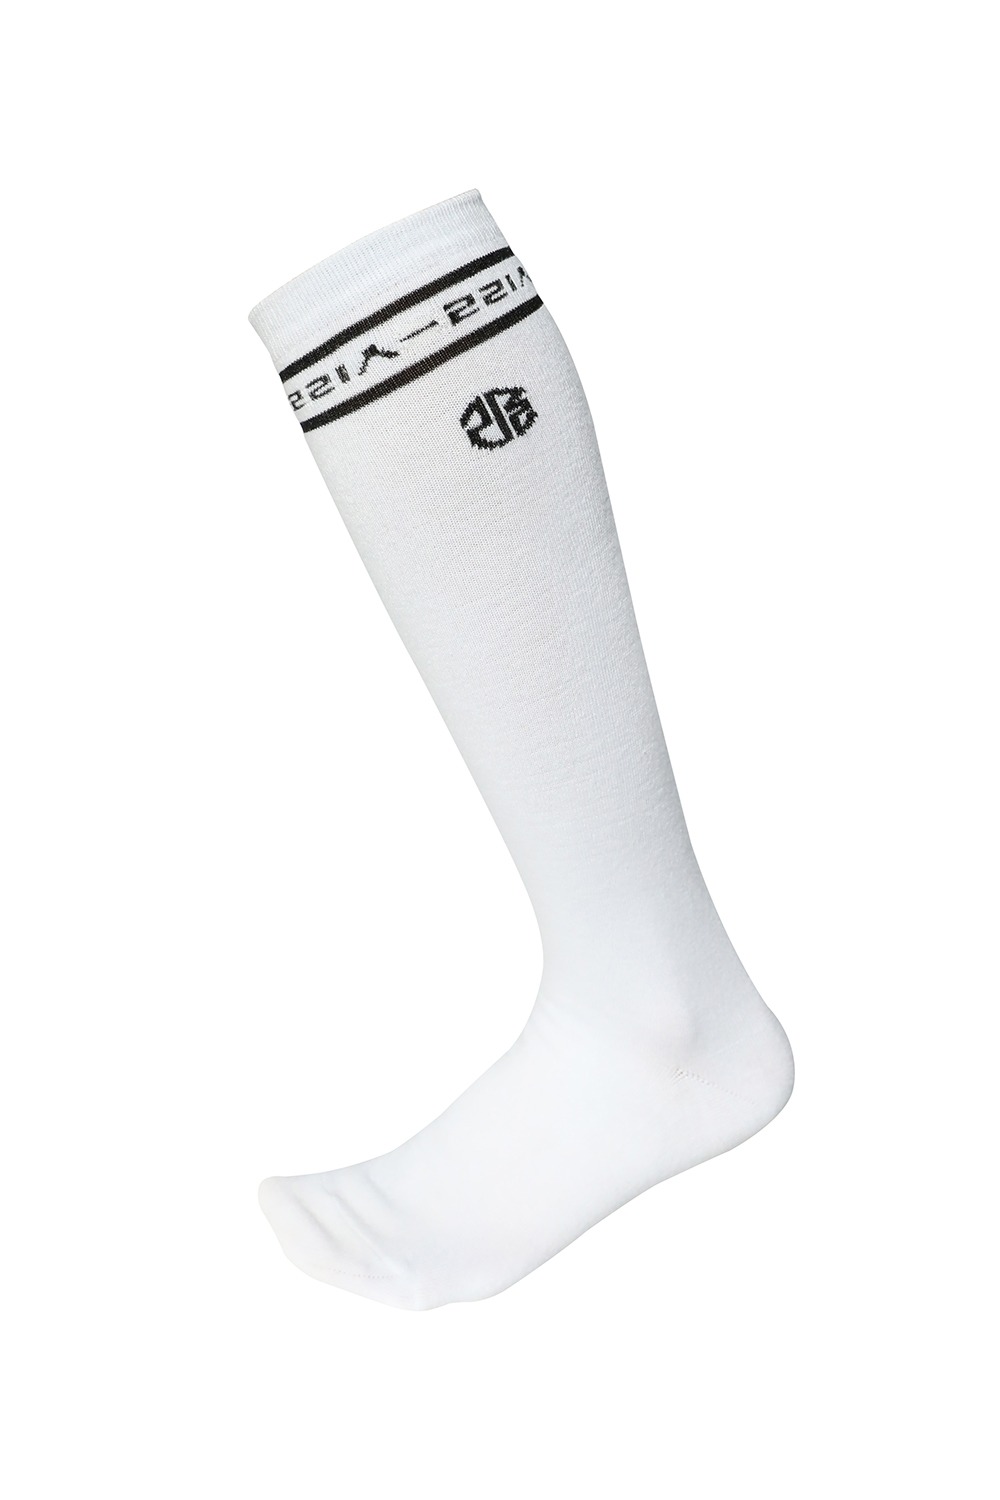 Leesle Lettering Knee socks [White]